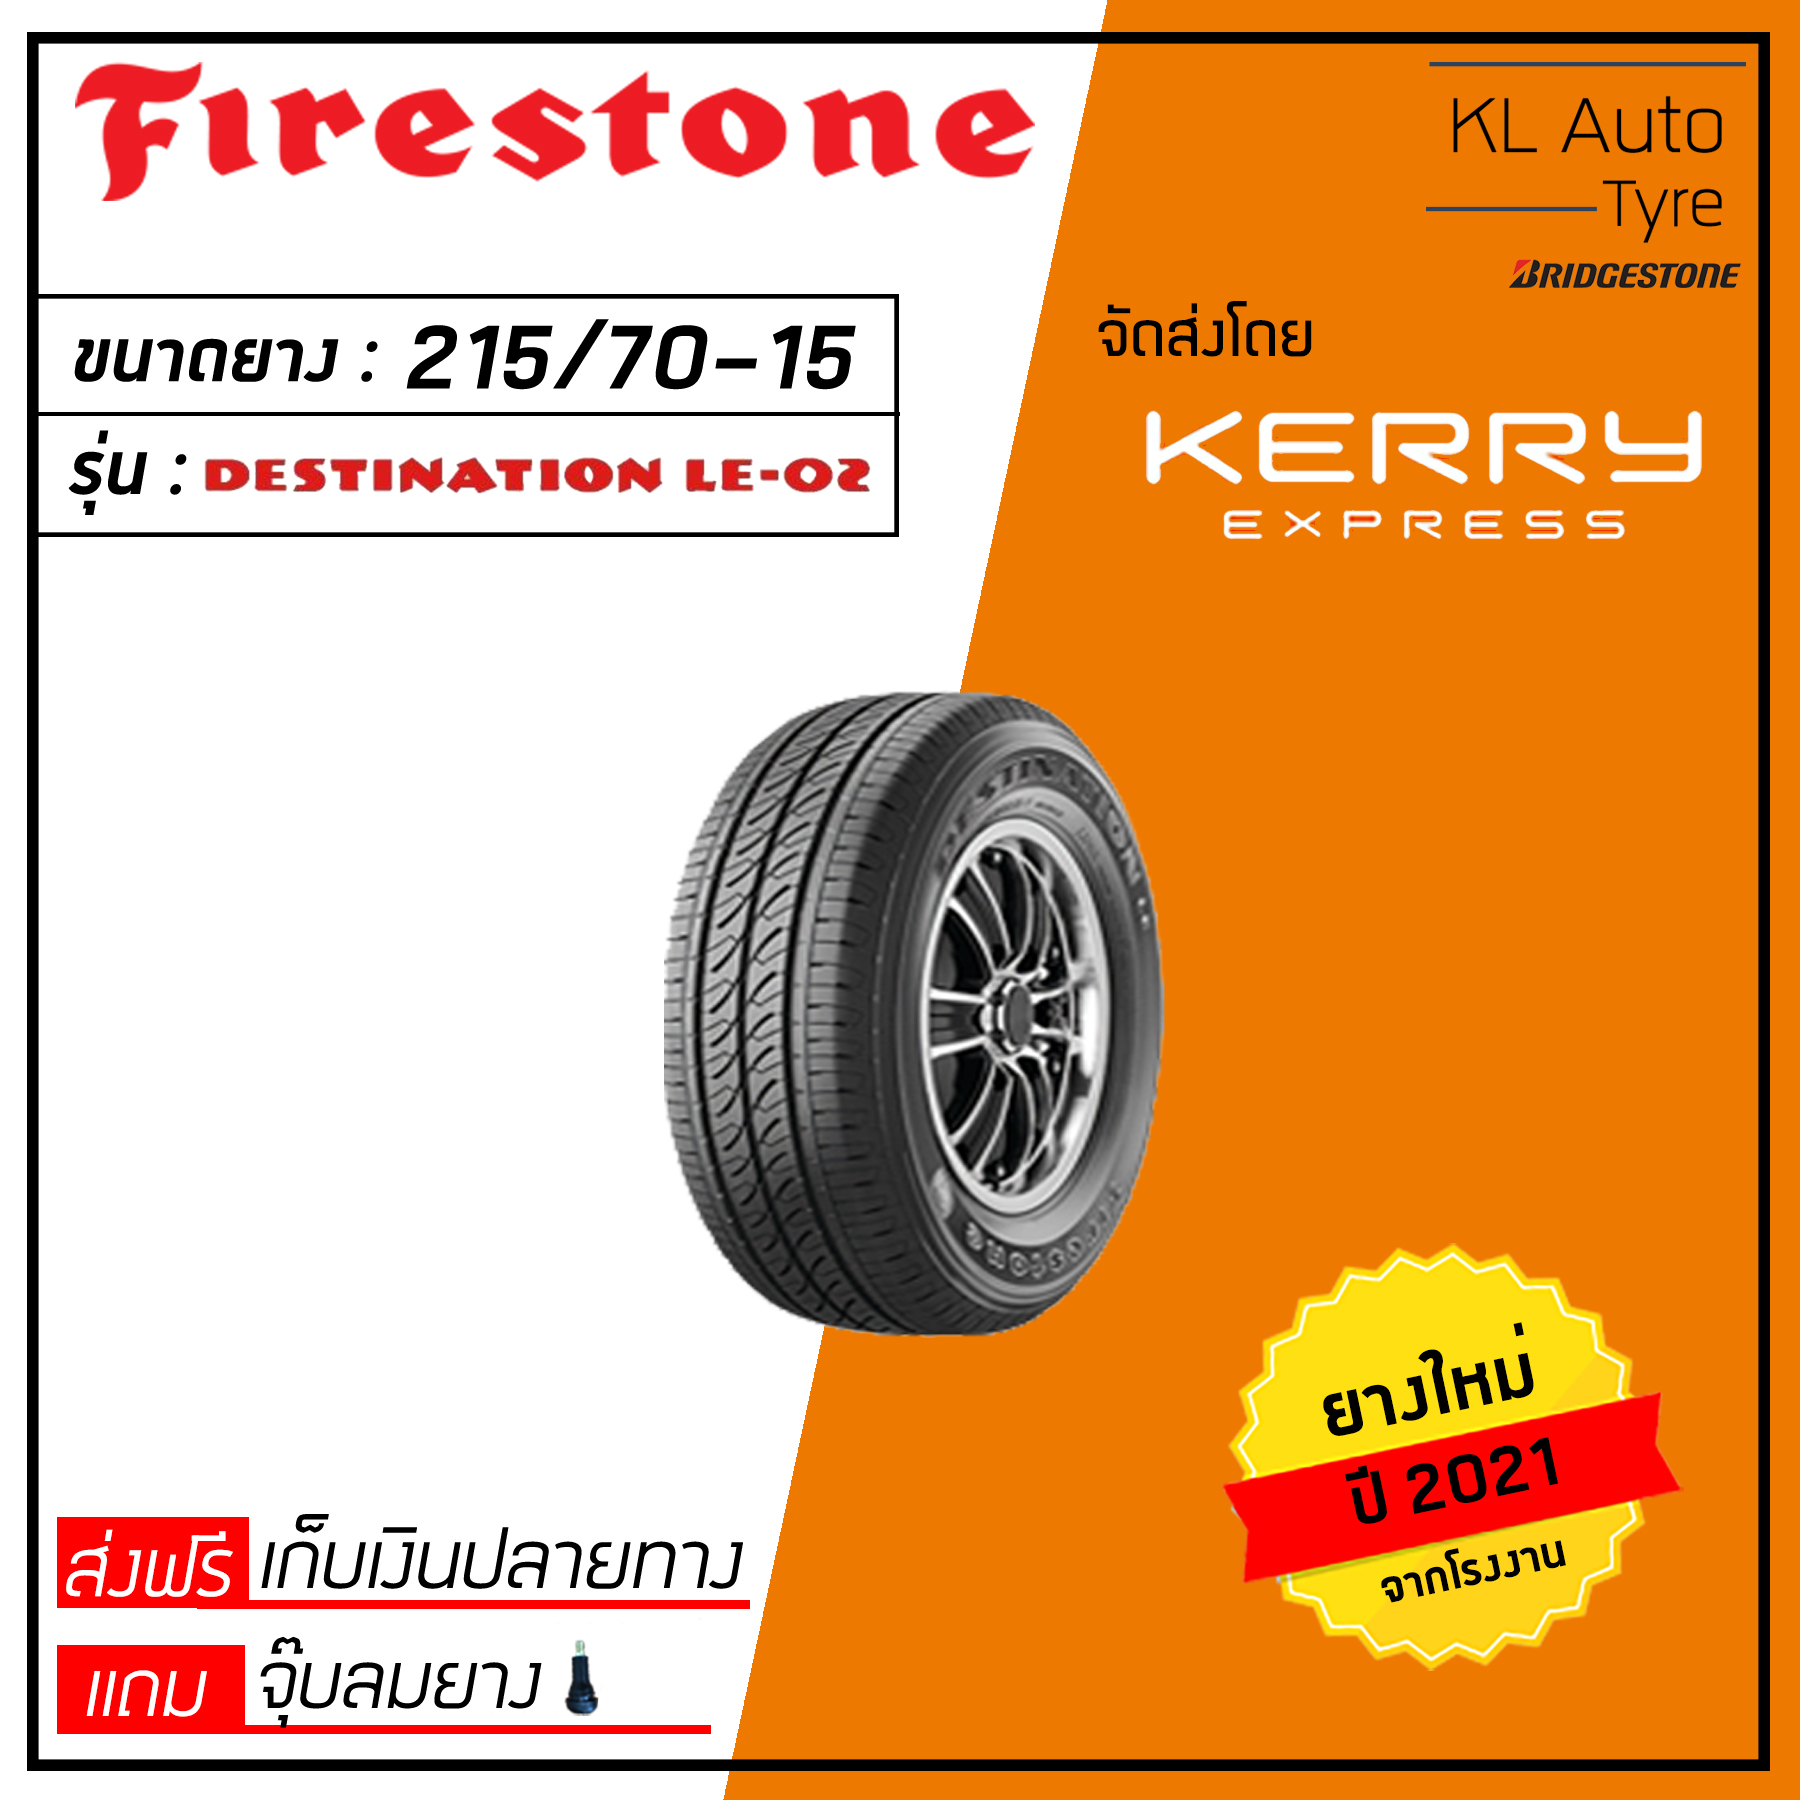 Firestone 215/70-15 LE-02 1 เส้น ปี 21 (ฟรี จุ๊บยาง 1 ตัว มูลค่า 50 บาท)